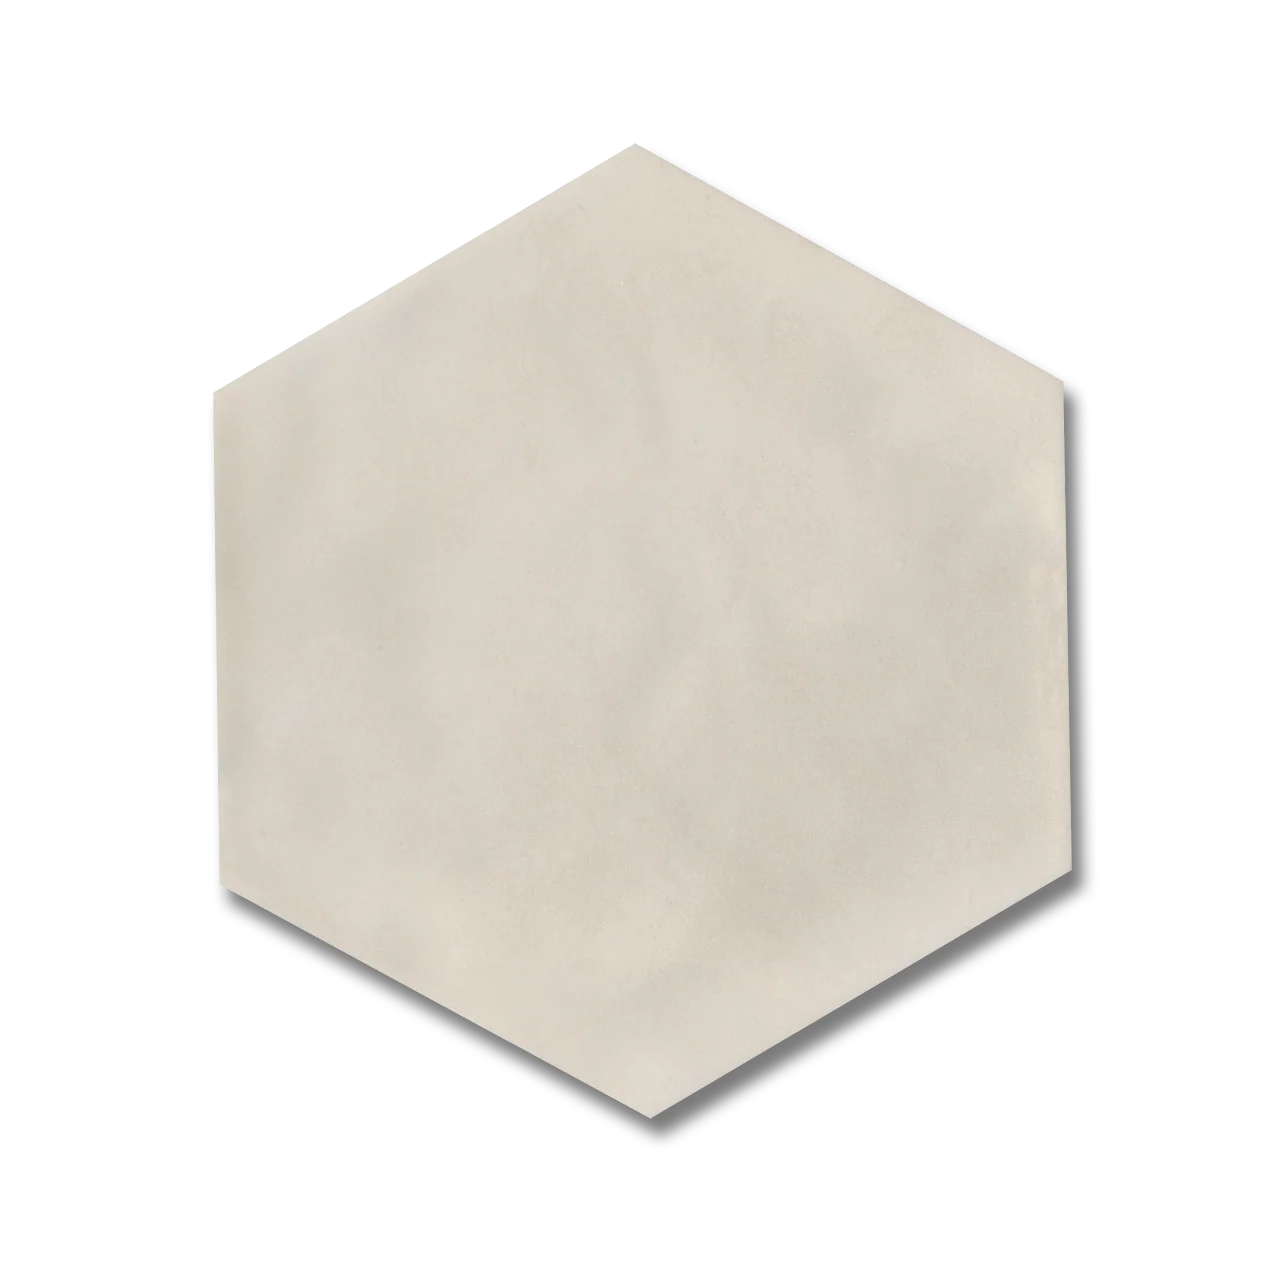 Maiolica 7”x8” Hexagon Ceramic Wall Tile Biscuit